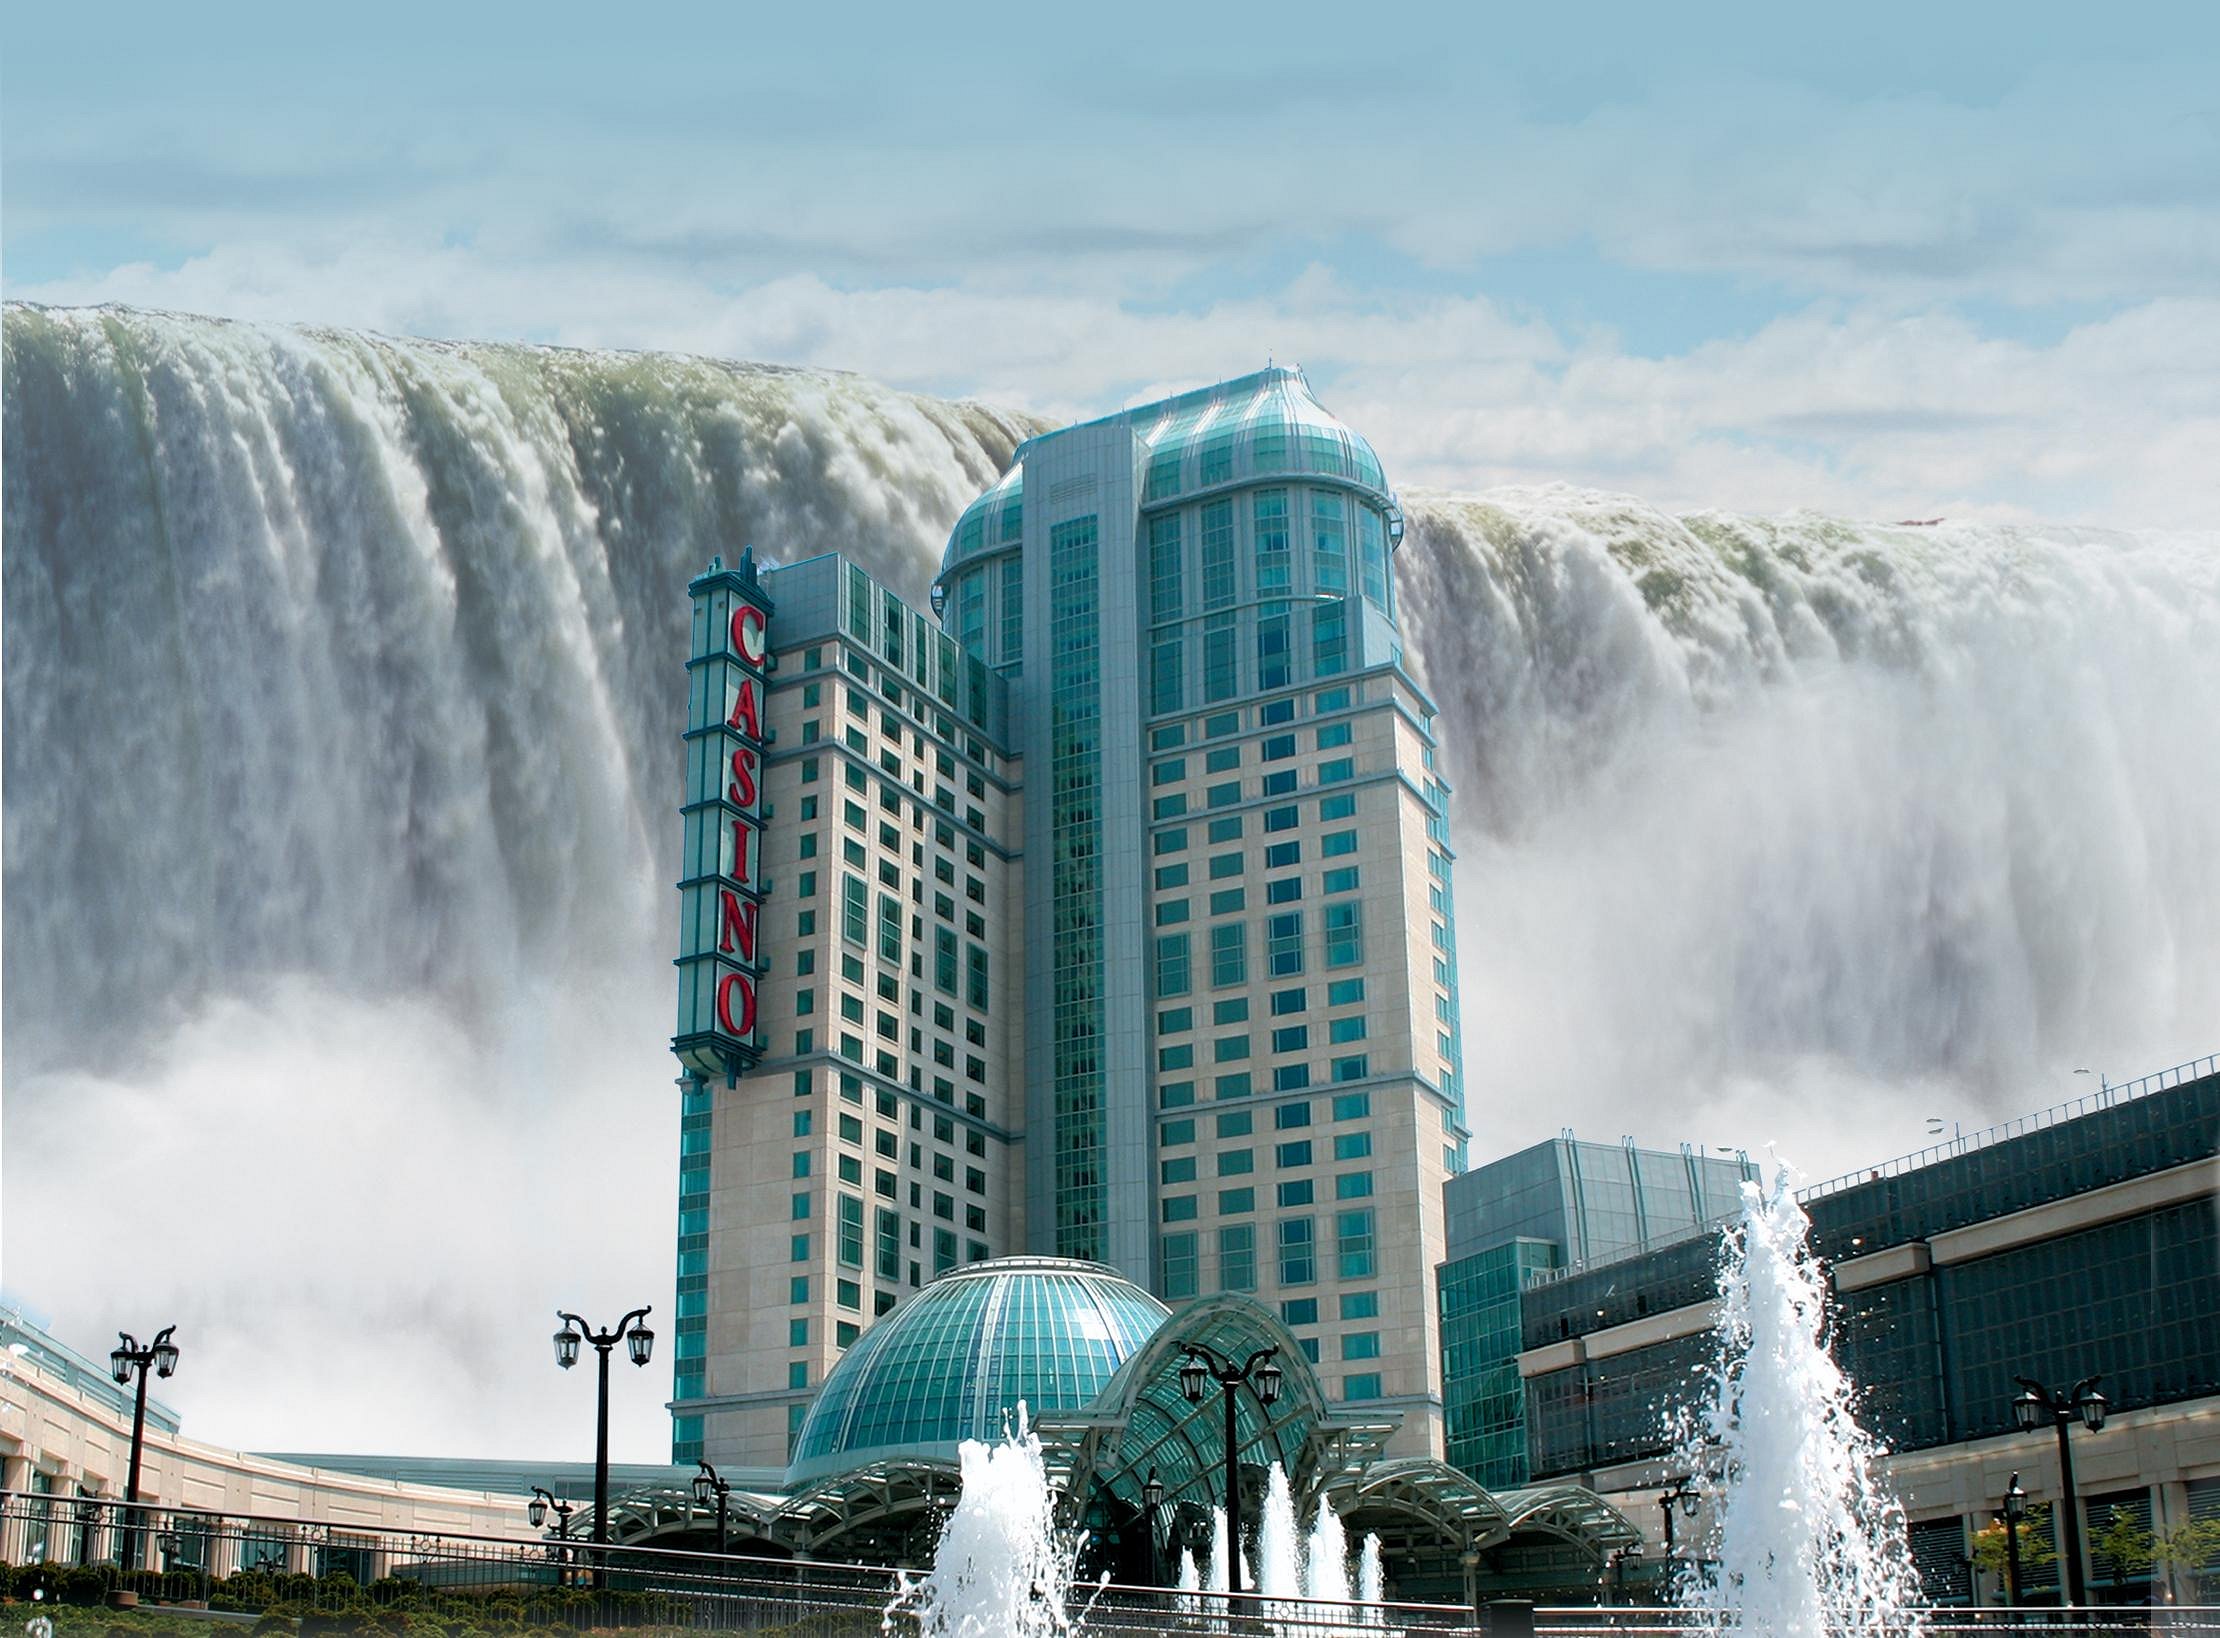 Niagara Fallsview Casino Resort Google image from http://www.niagarapeninsula.com/data/Image/casinoimage.JPG